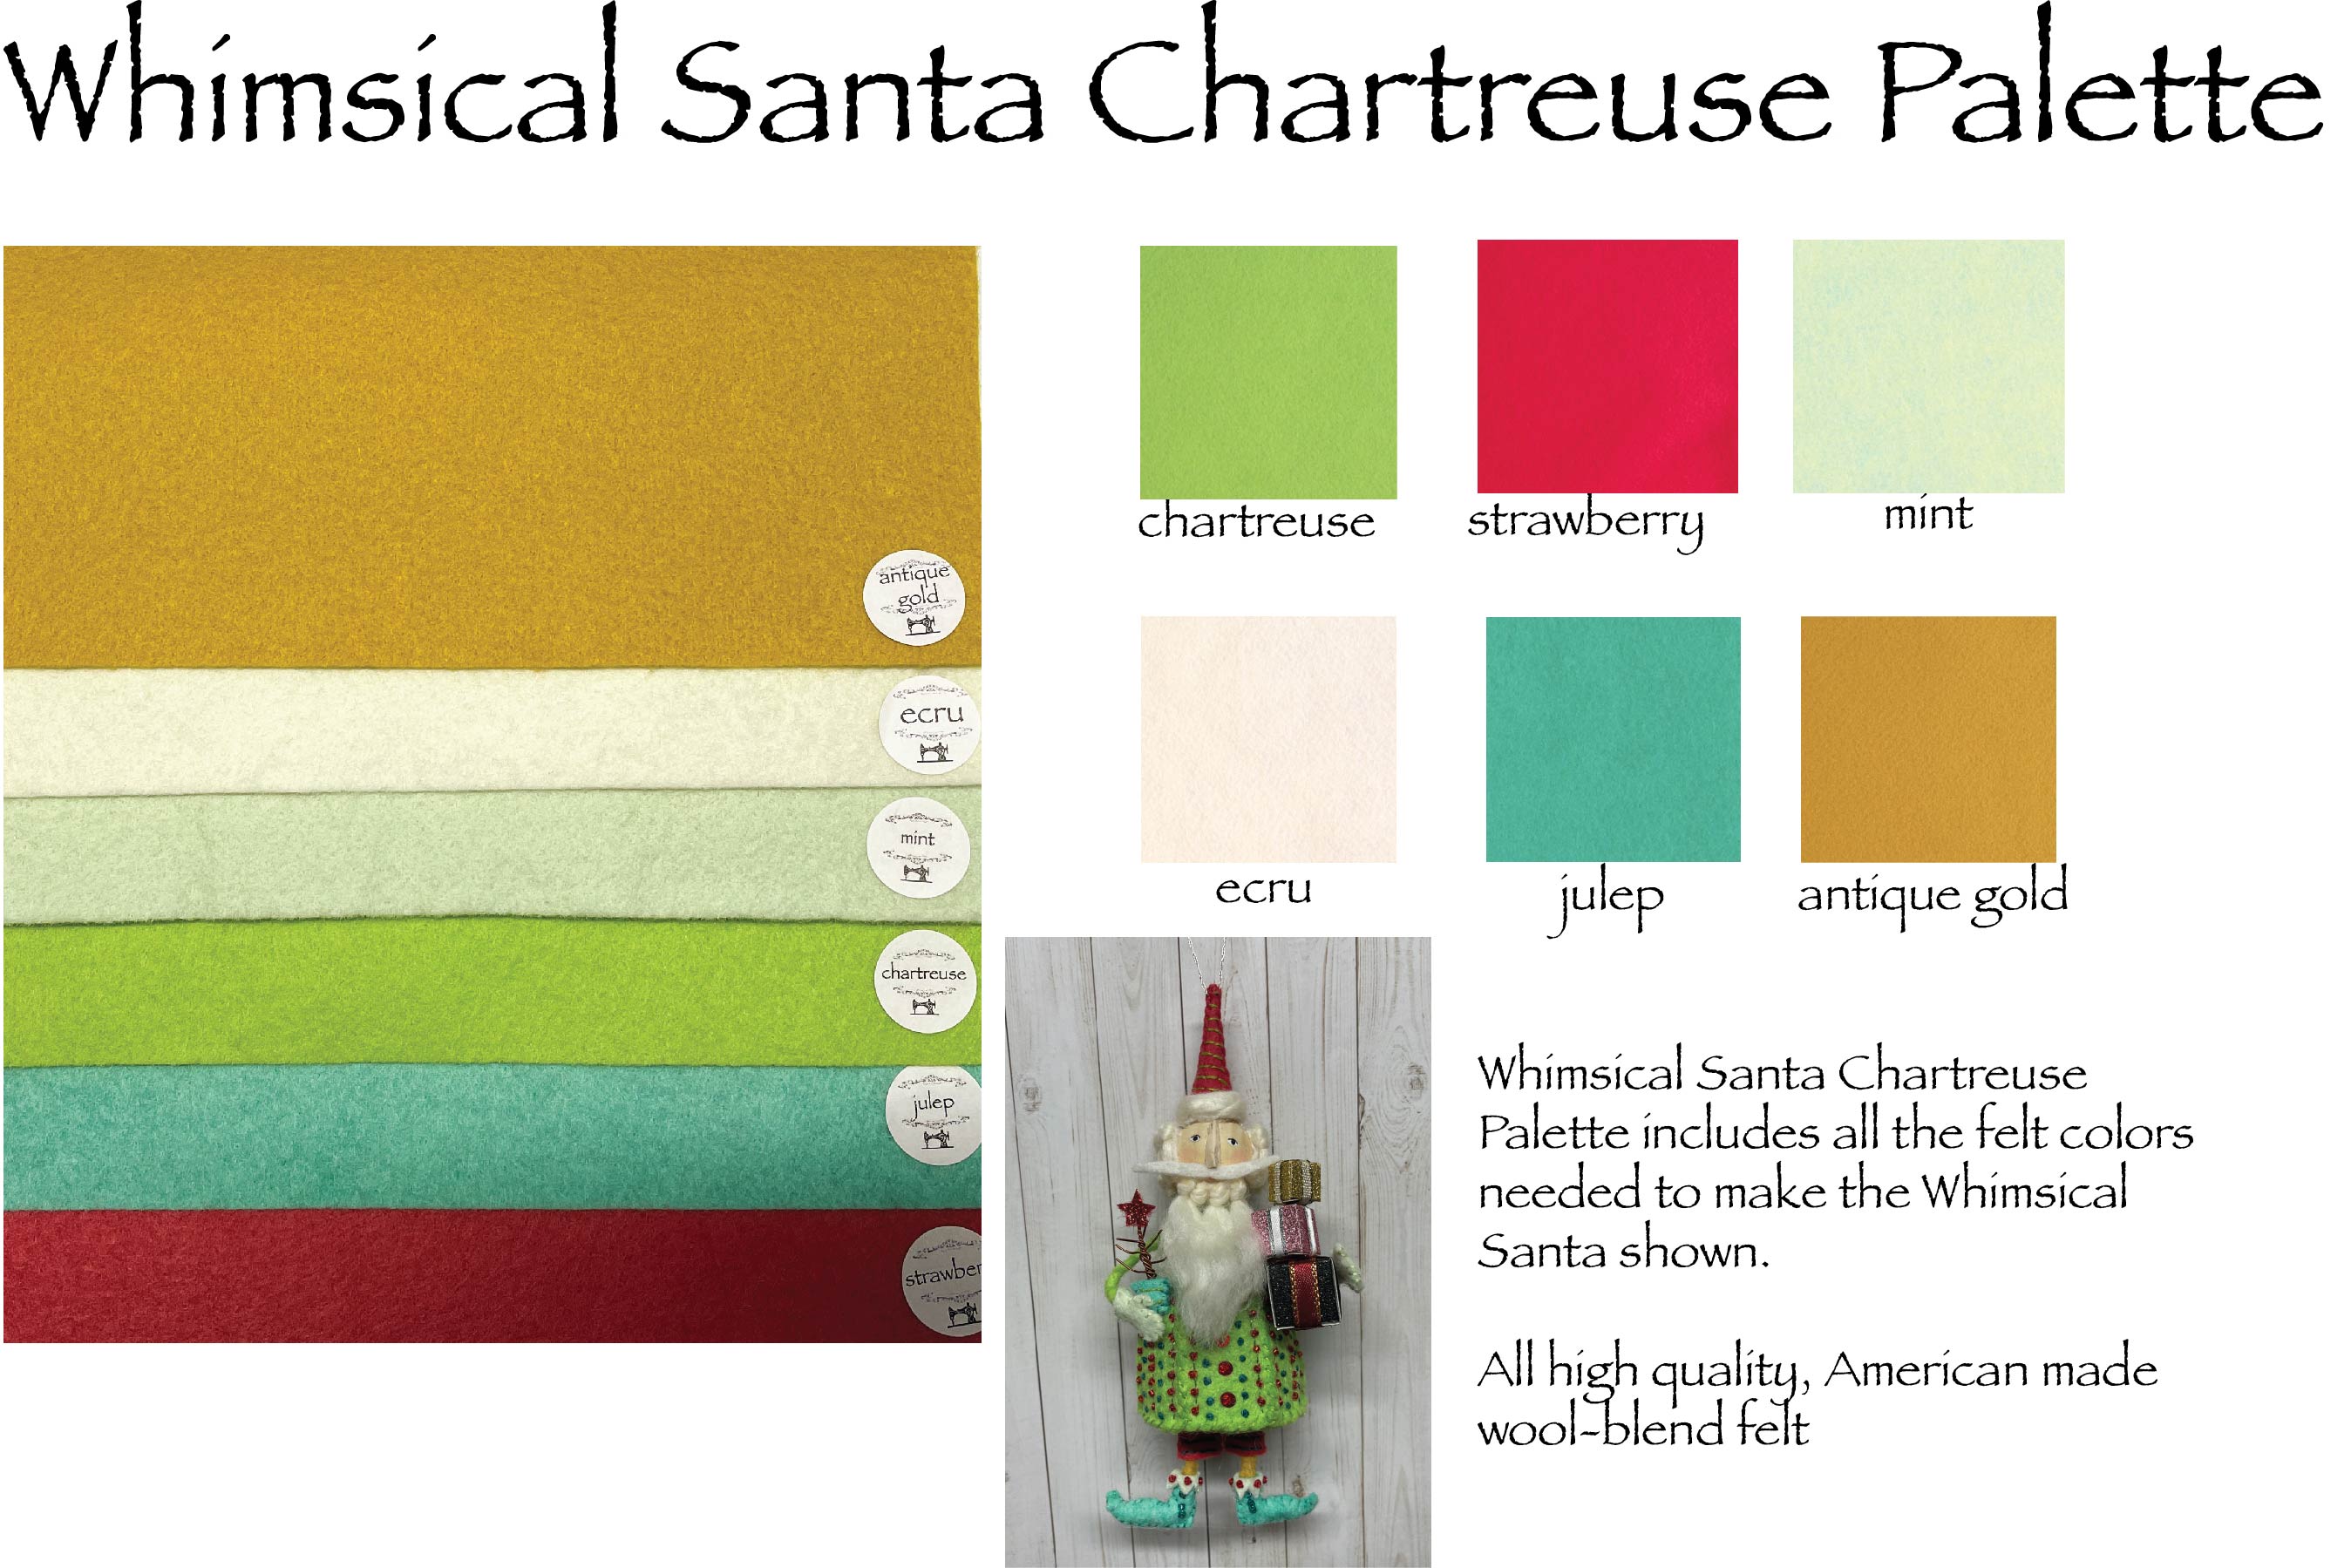 Whimsical Santa Chartreuse Palette Merino Wool Blend Felt Sheets